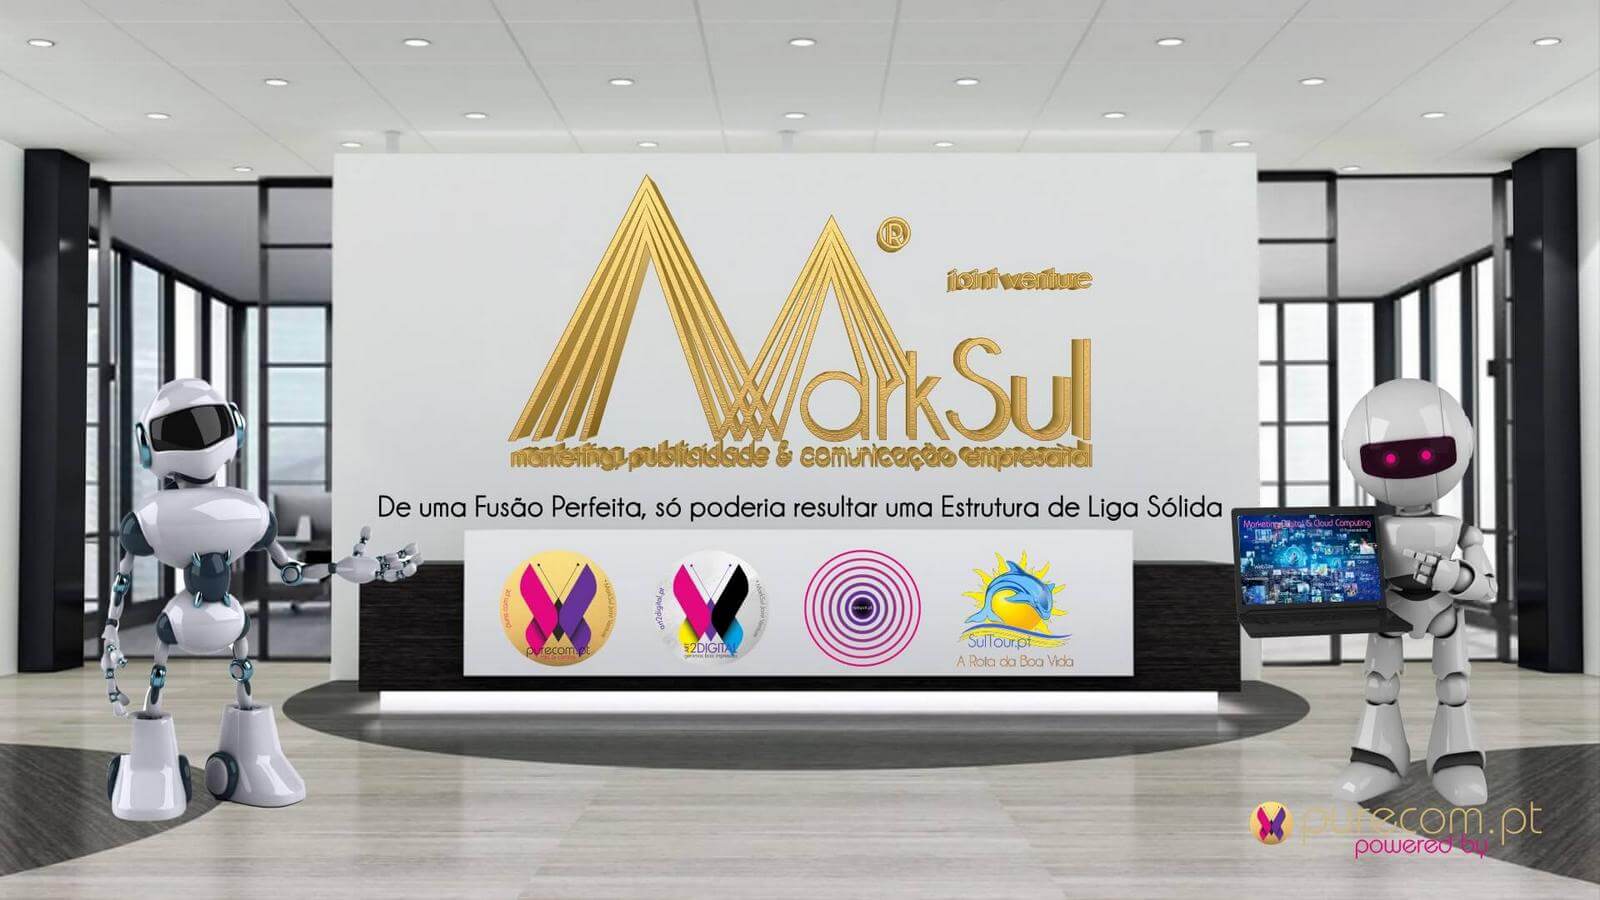 MarkSul • Marketing